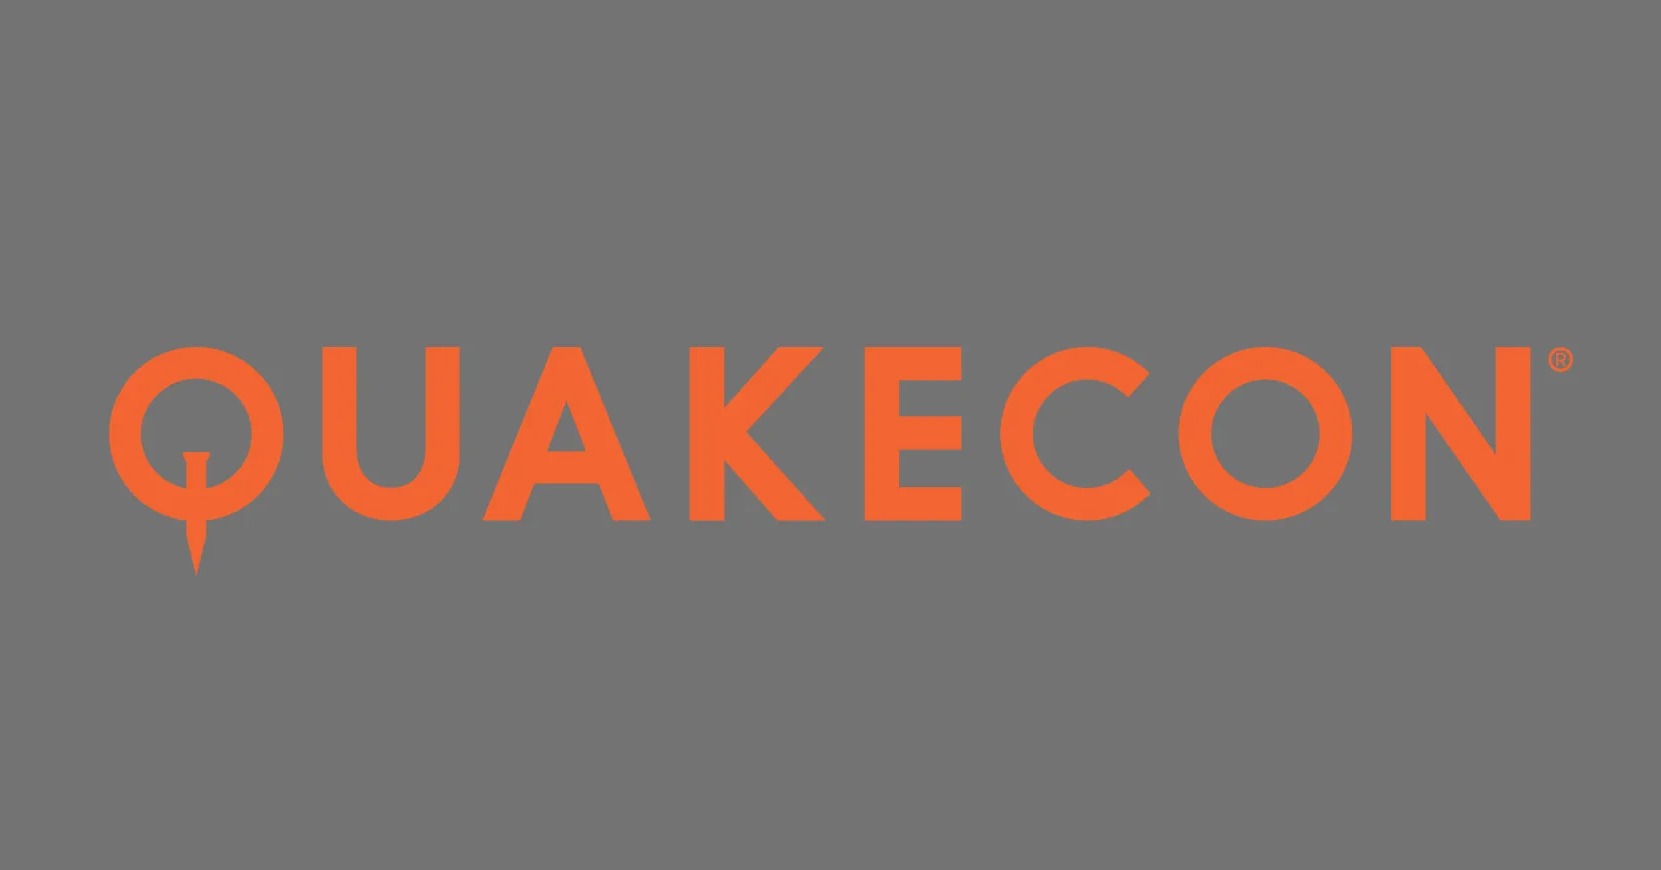 QuakeCon 2020